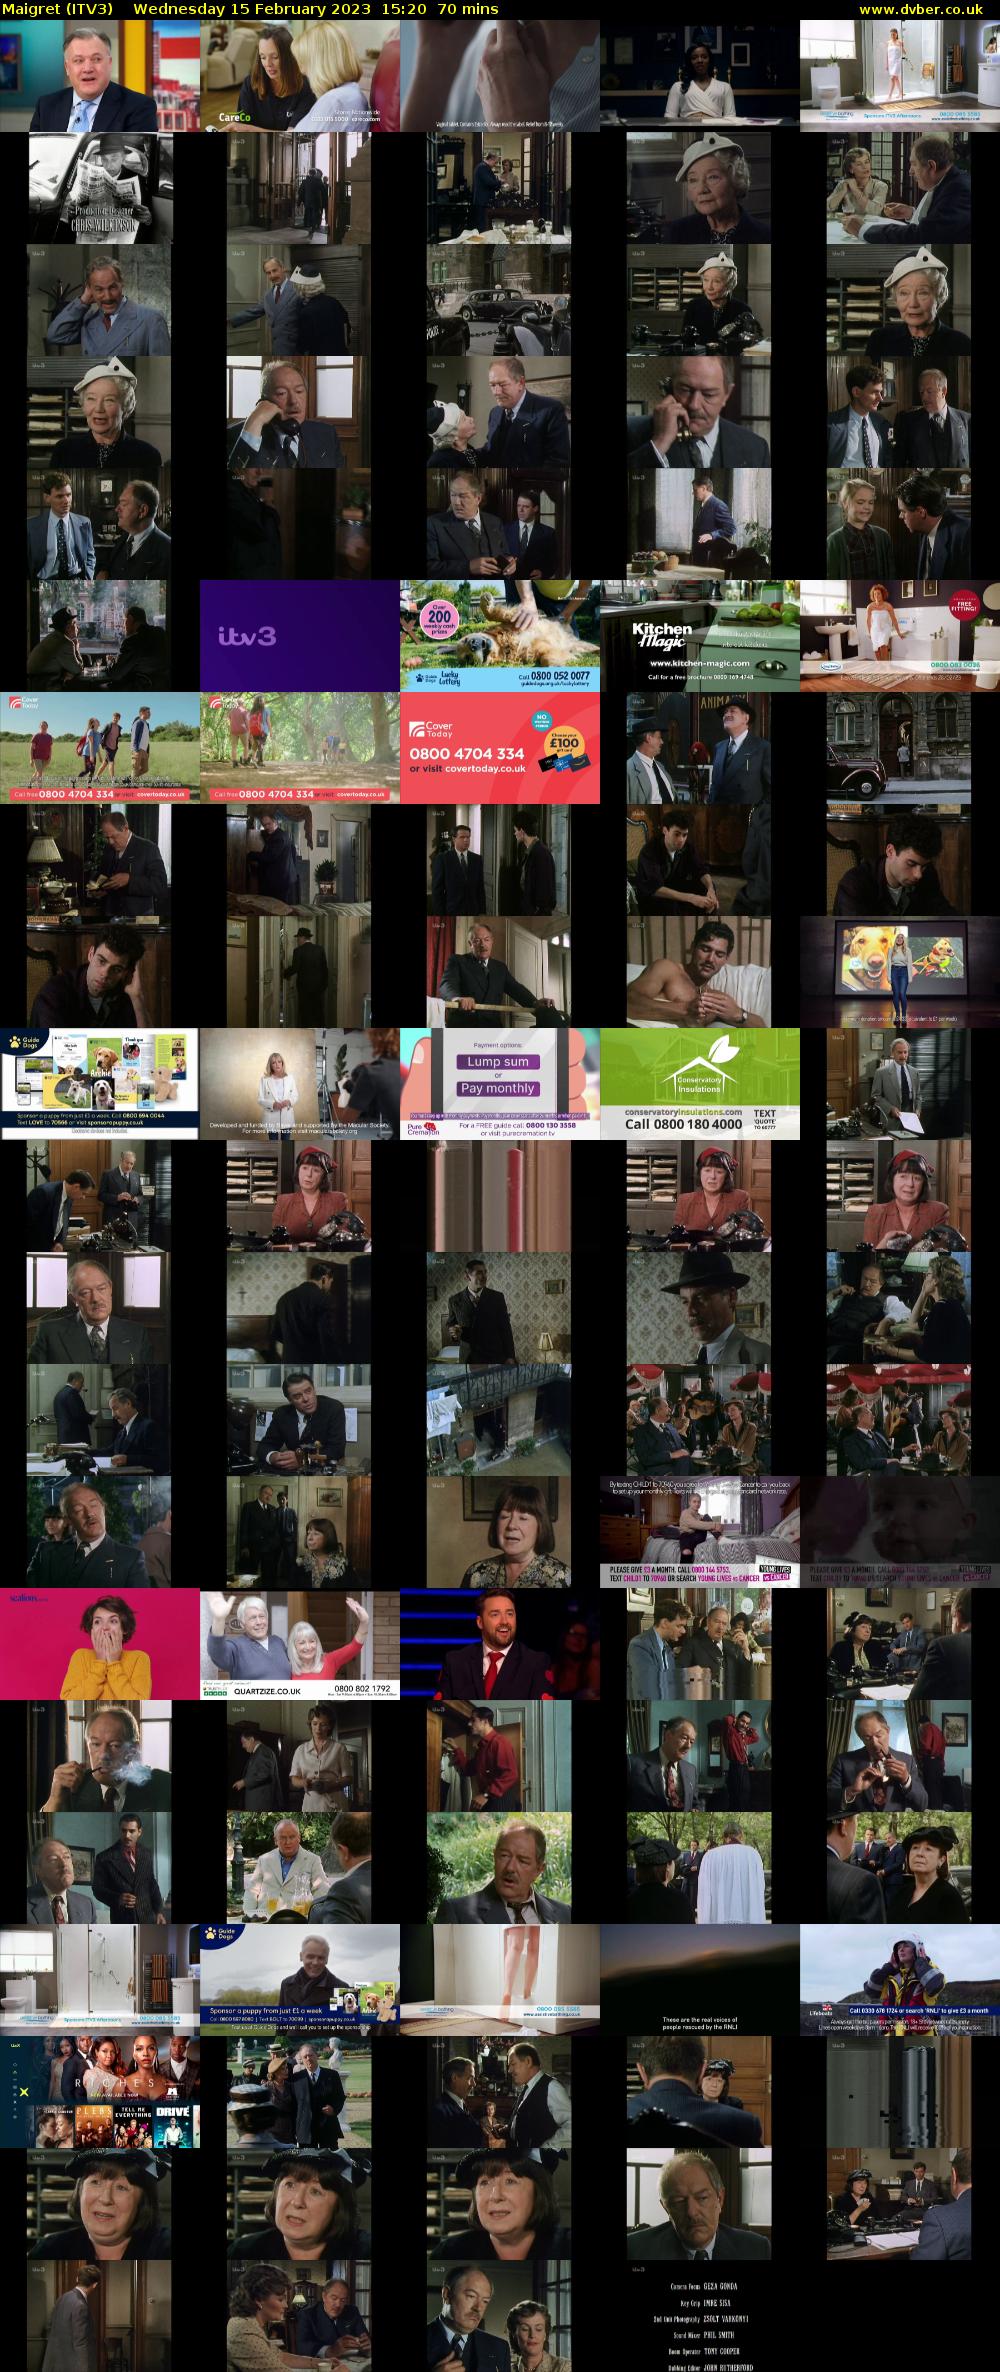 Maigret (ITV3) Wednesday 15 February 2023 15:20 - 16:30